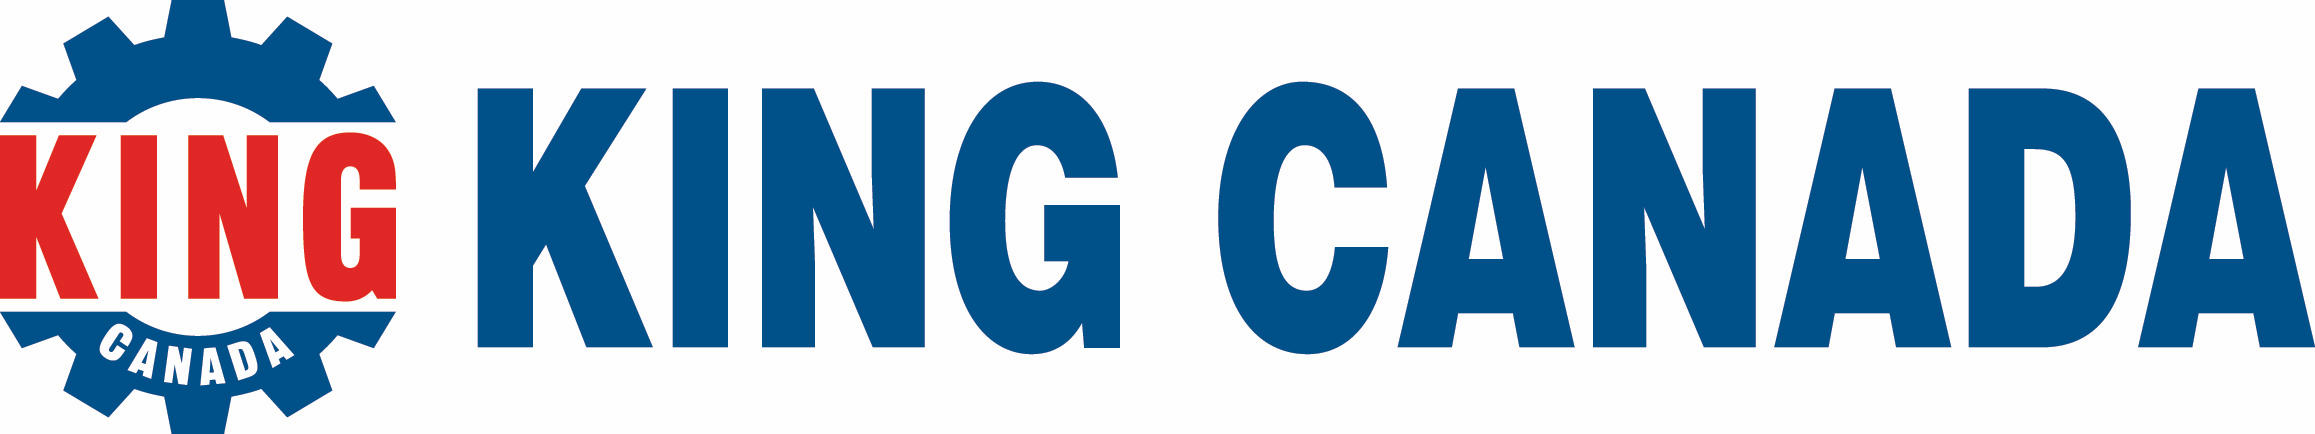 King Canada logo